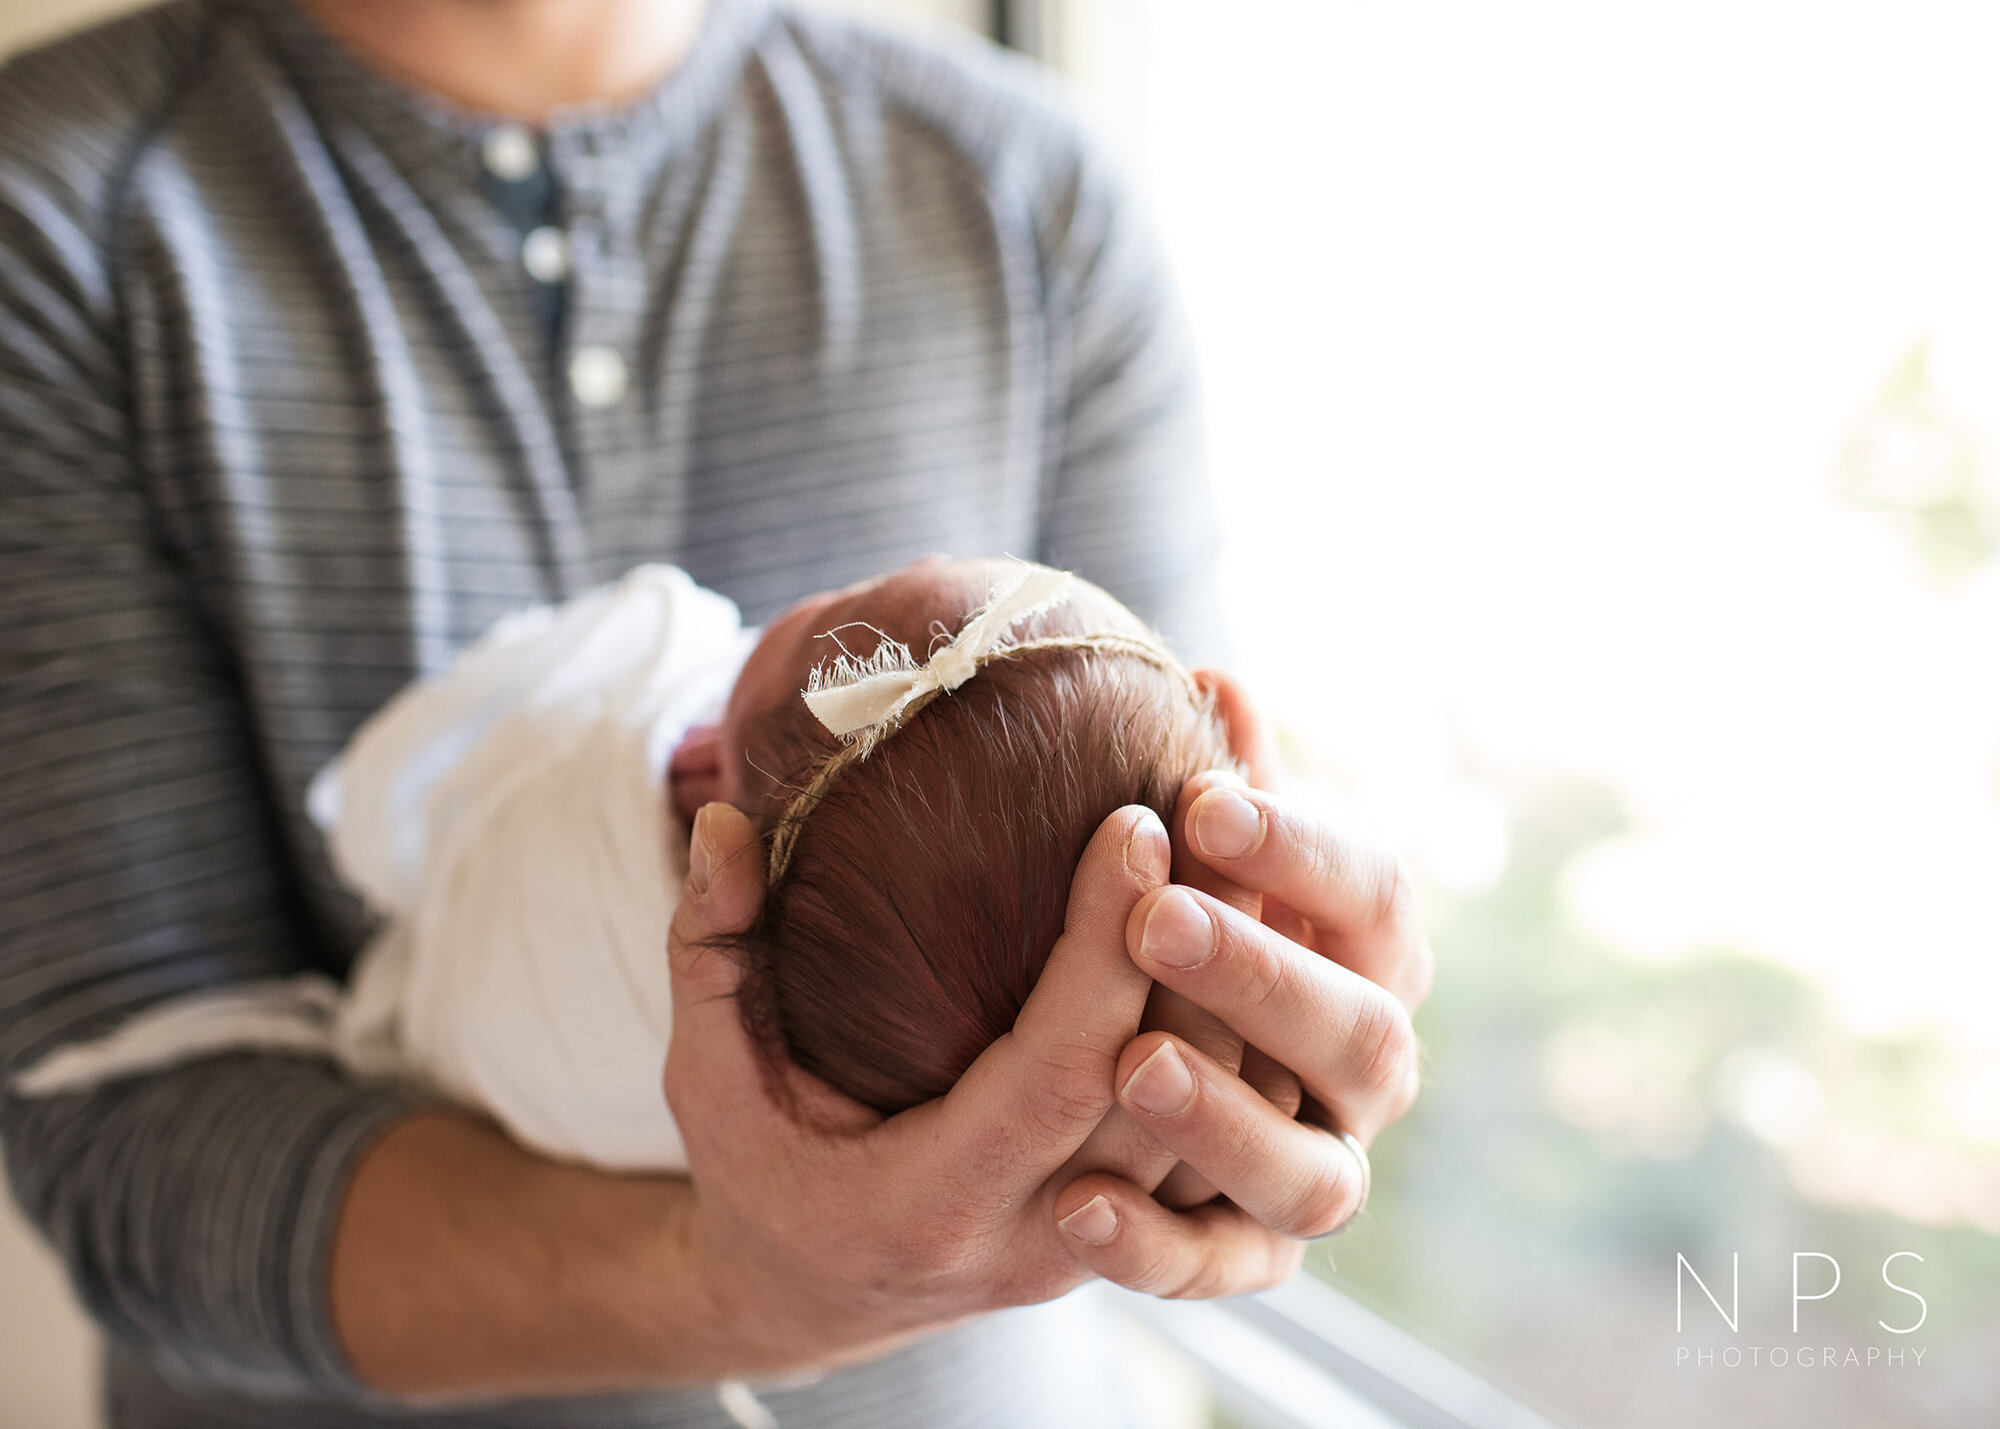 Newborn Details - NPS Photography